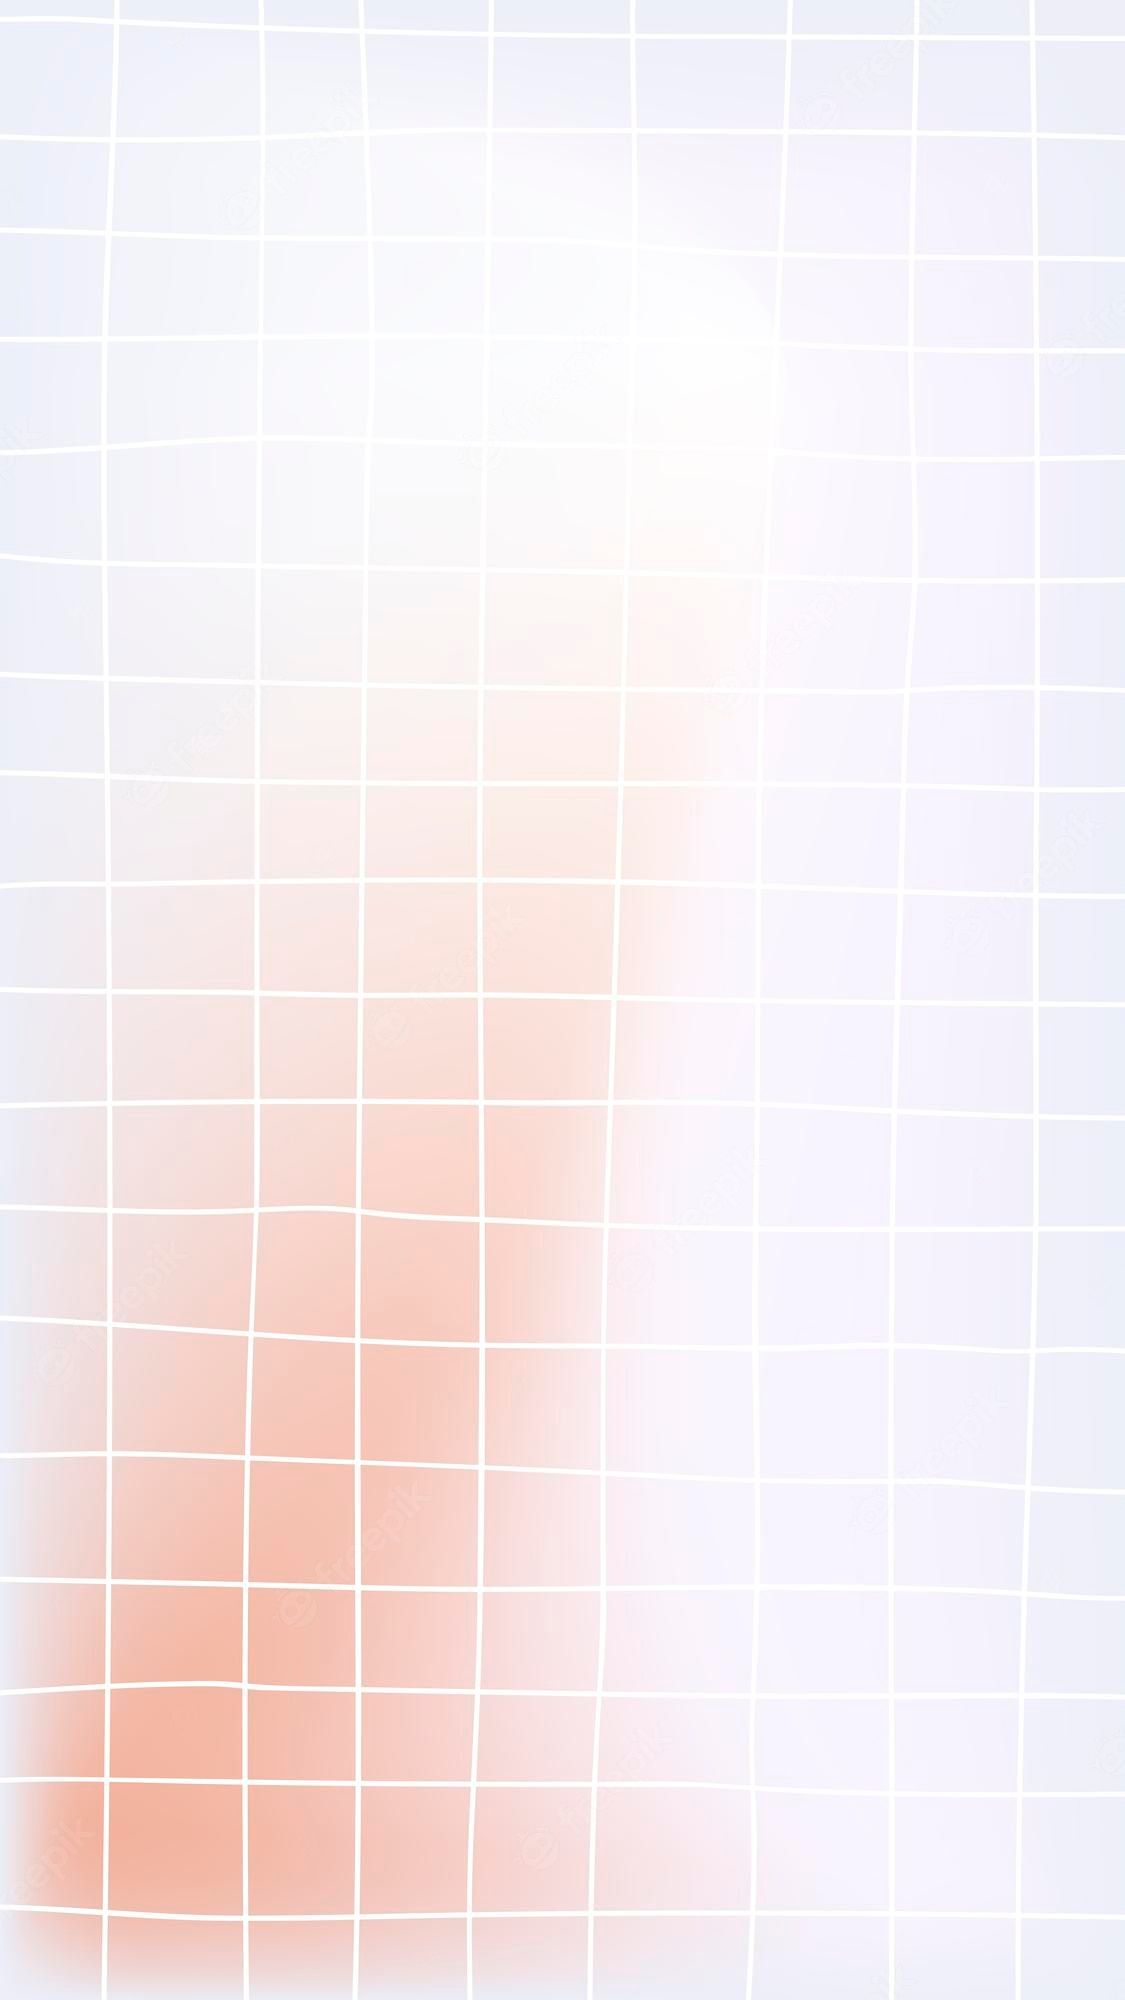 Pastel grid background Vectors & Illustrations for Free Download